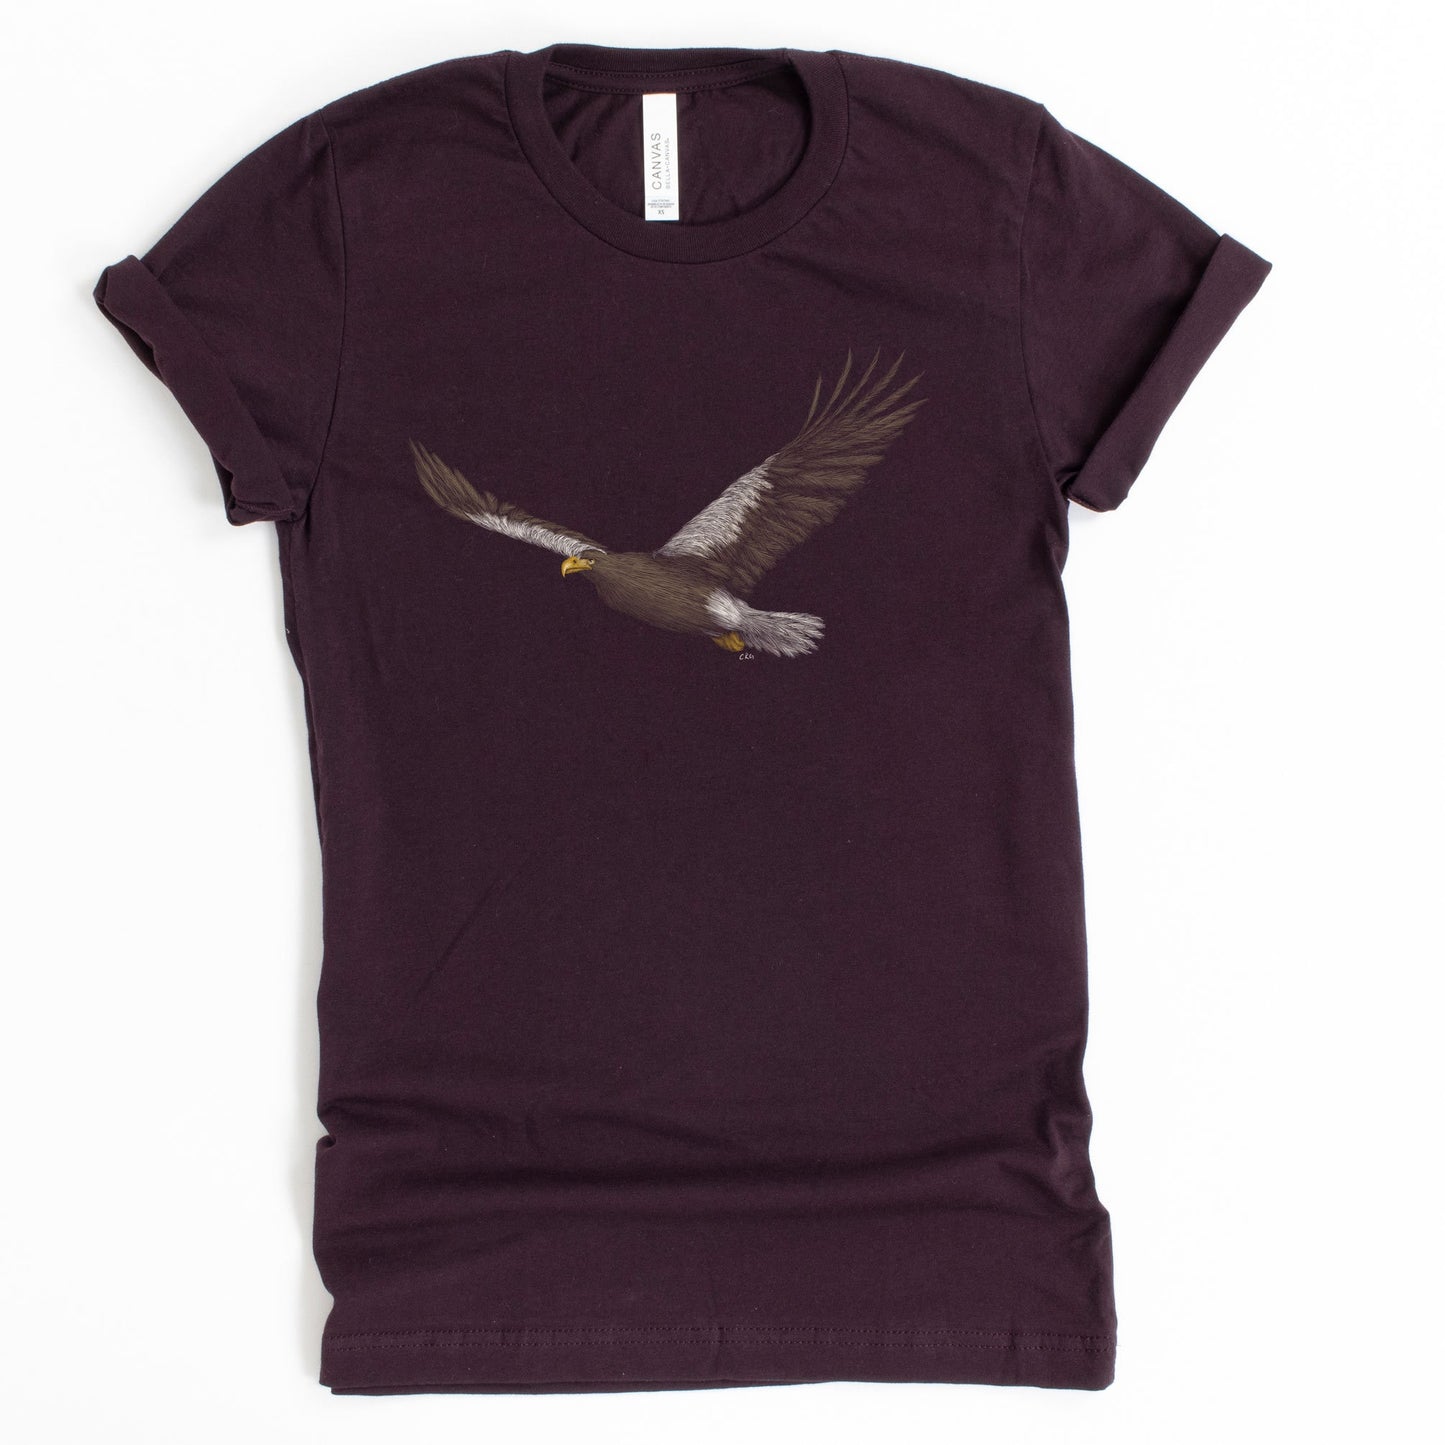 Steller's Sea Eagle Shirt